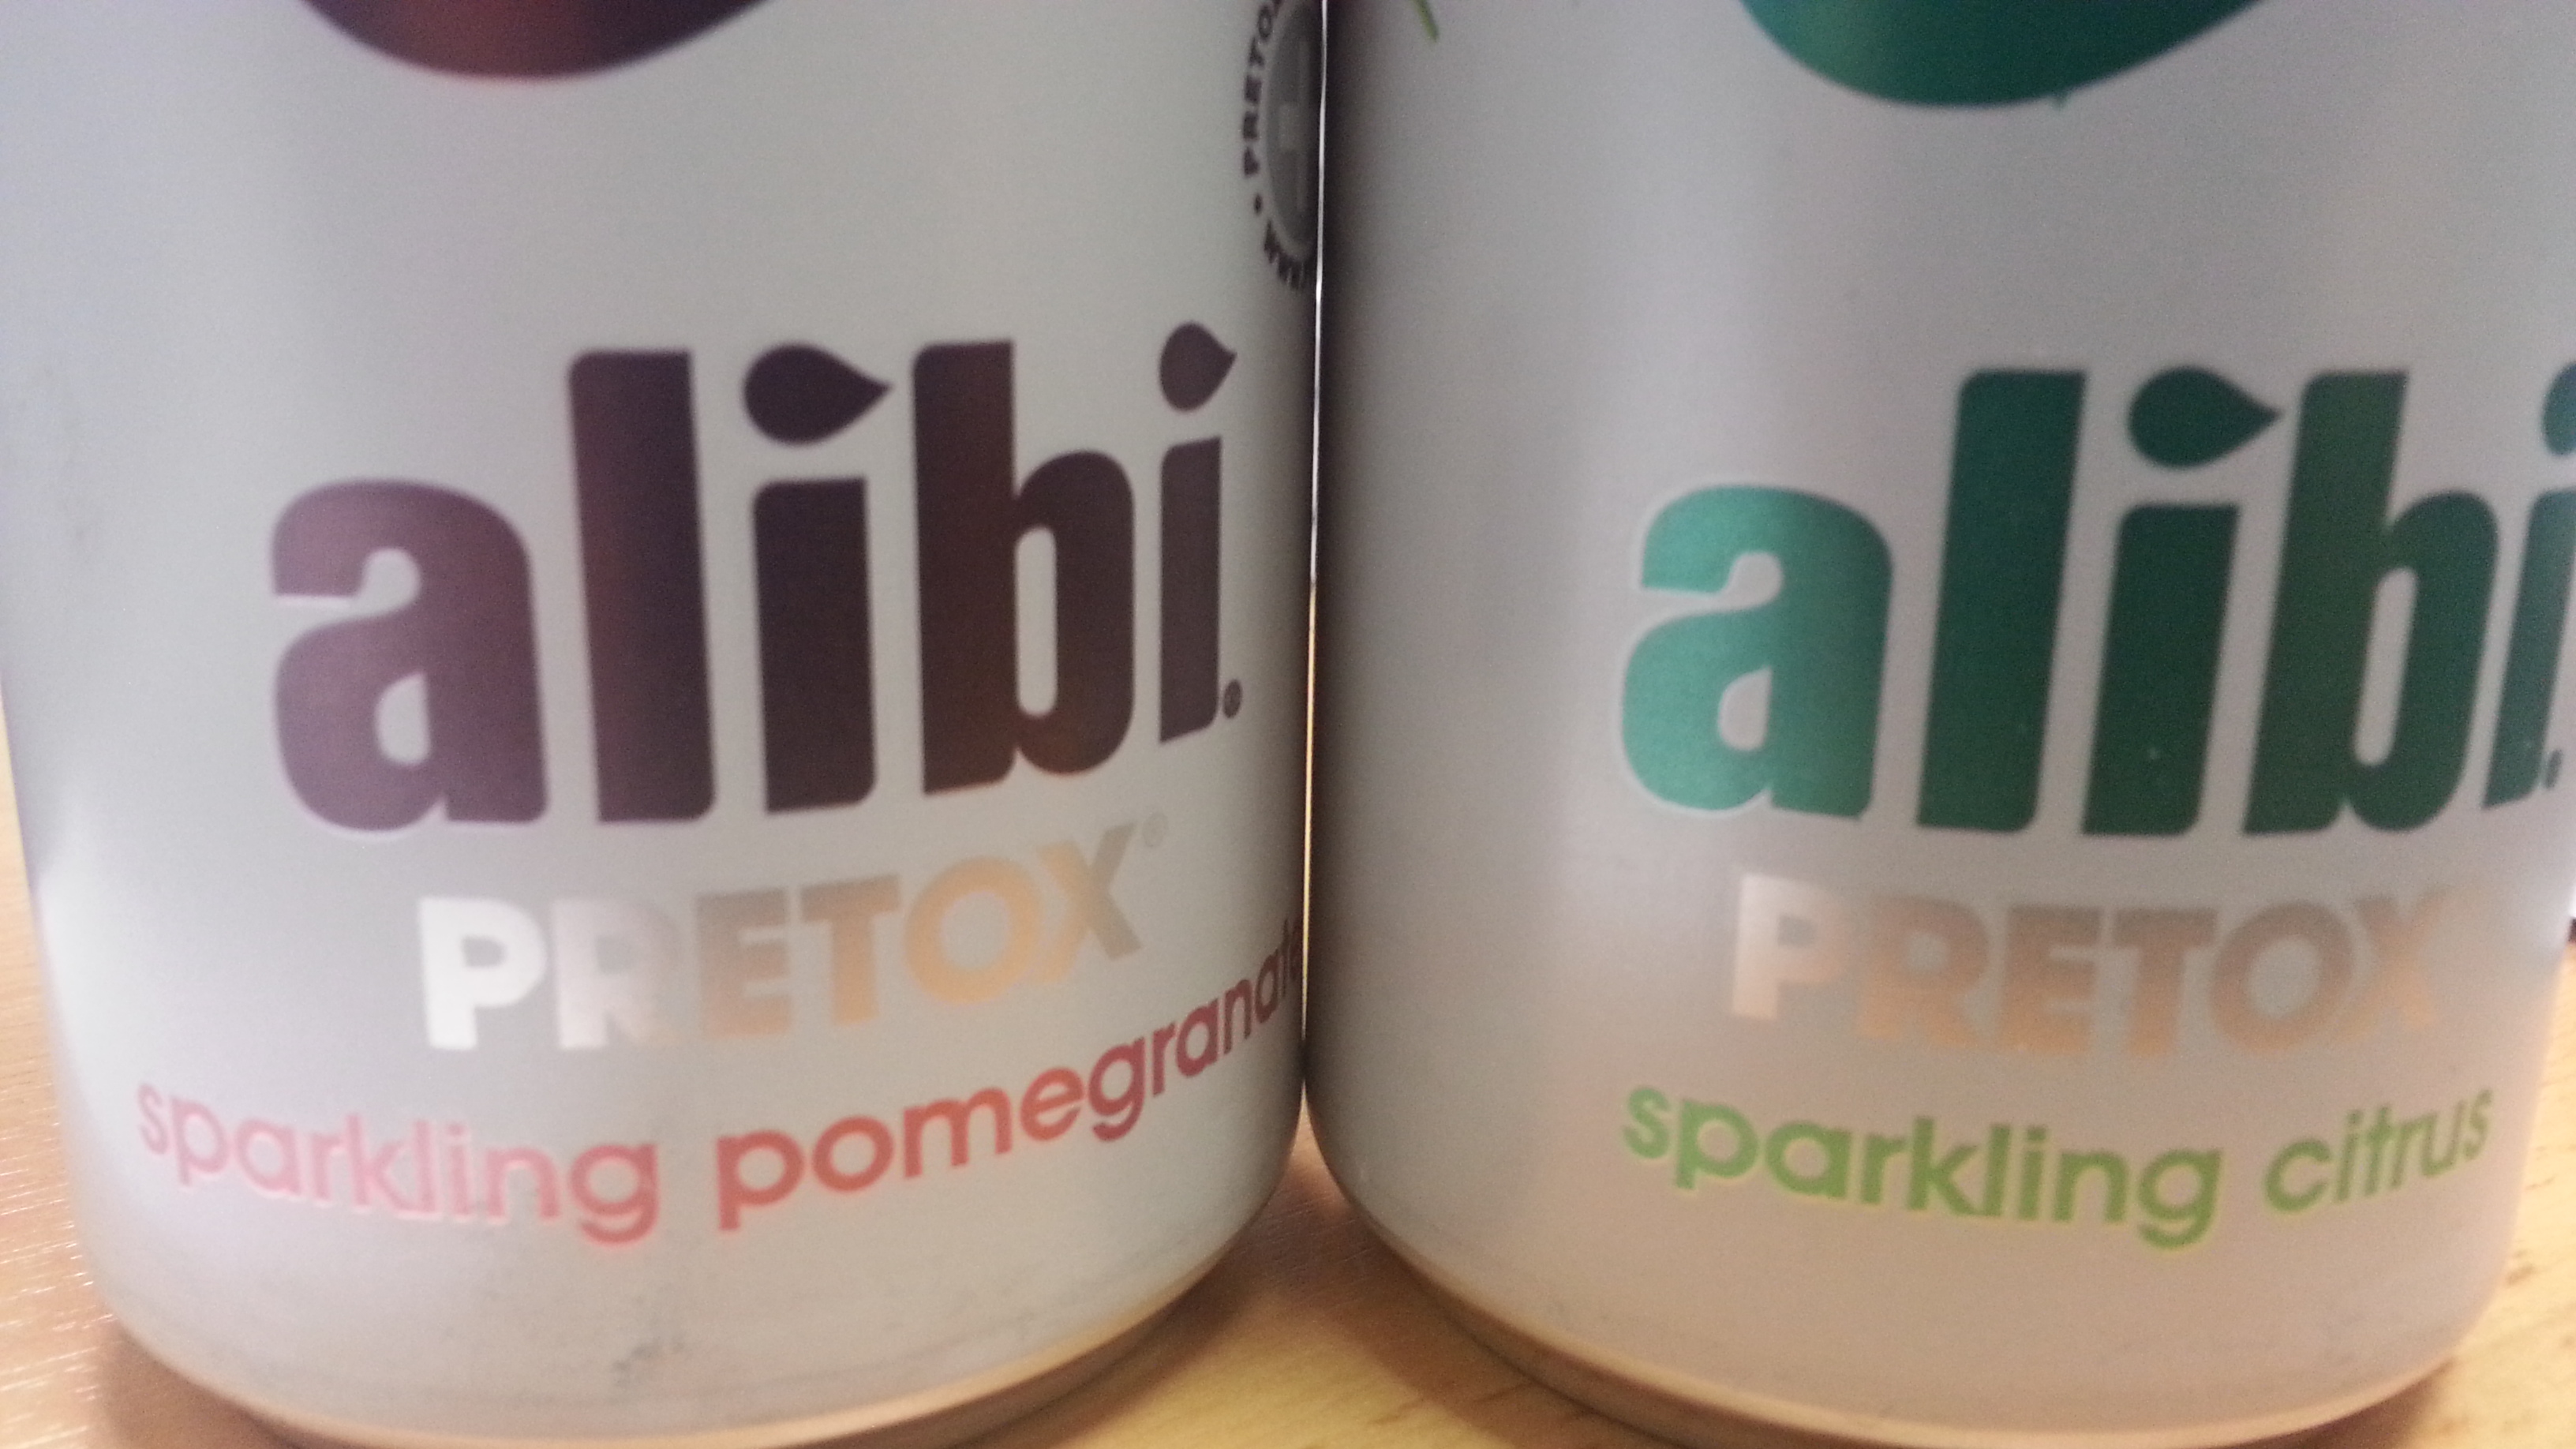 Alibi Health Drink for that refreshment hit